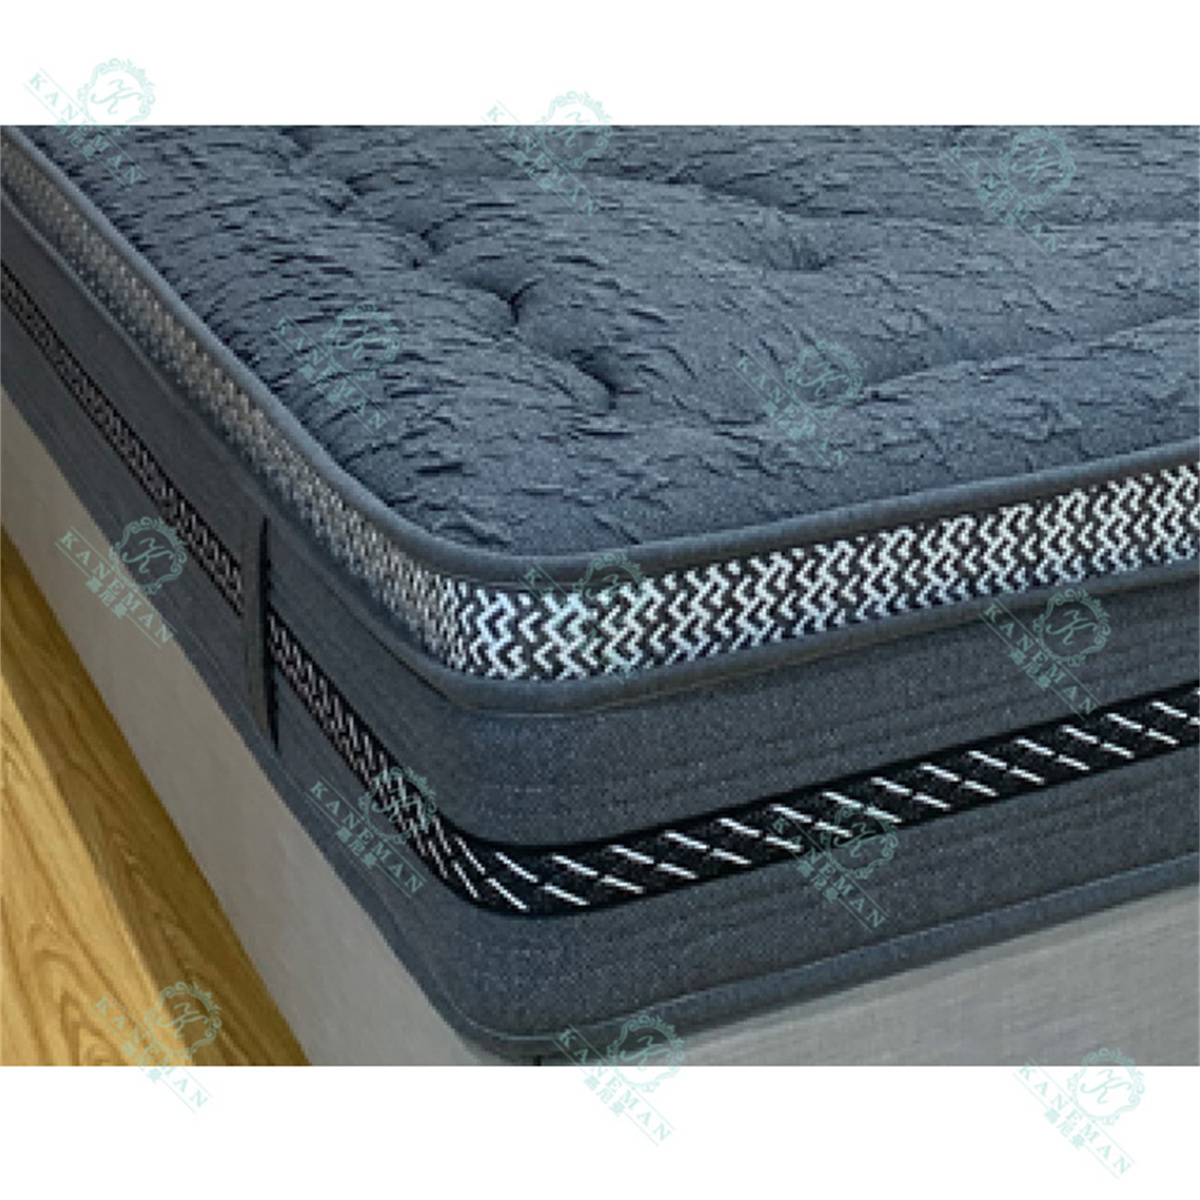 12inch pocket spring mattress5